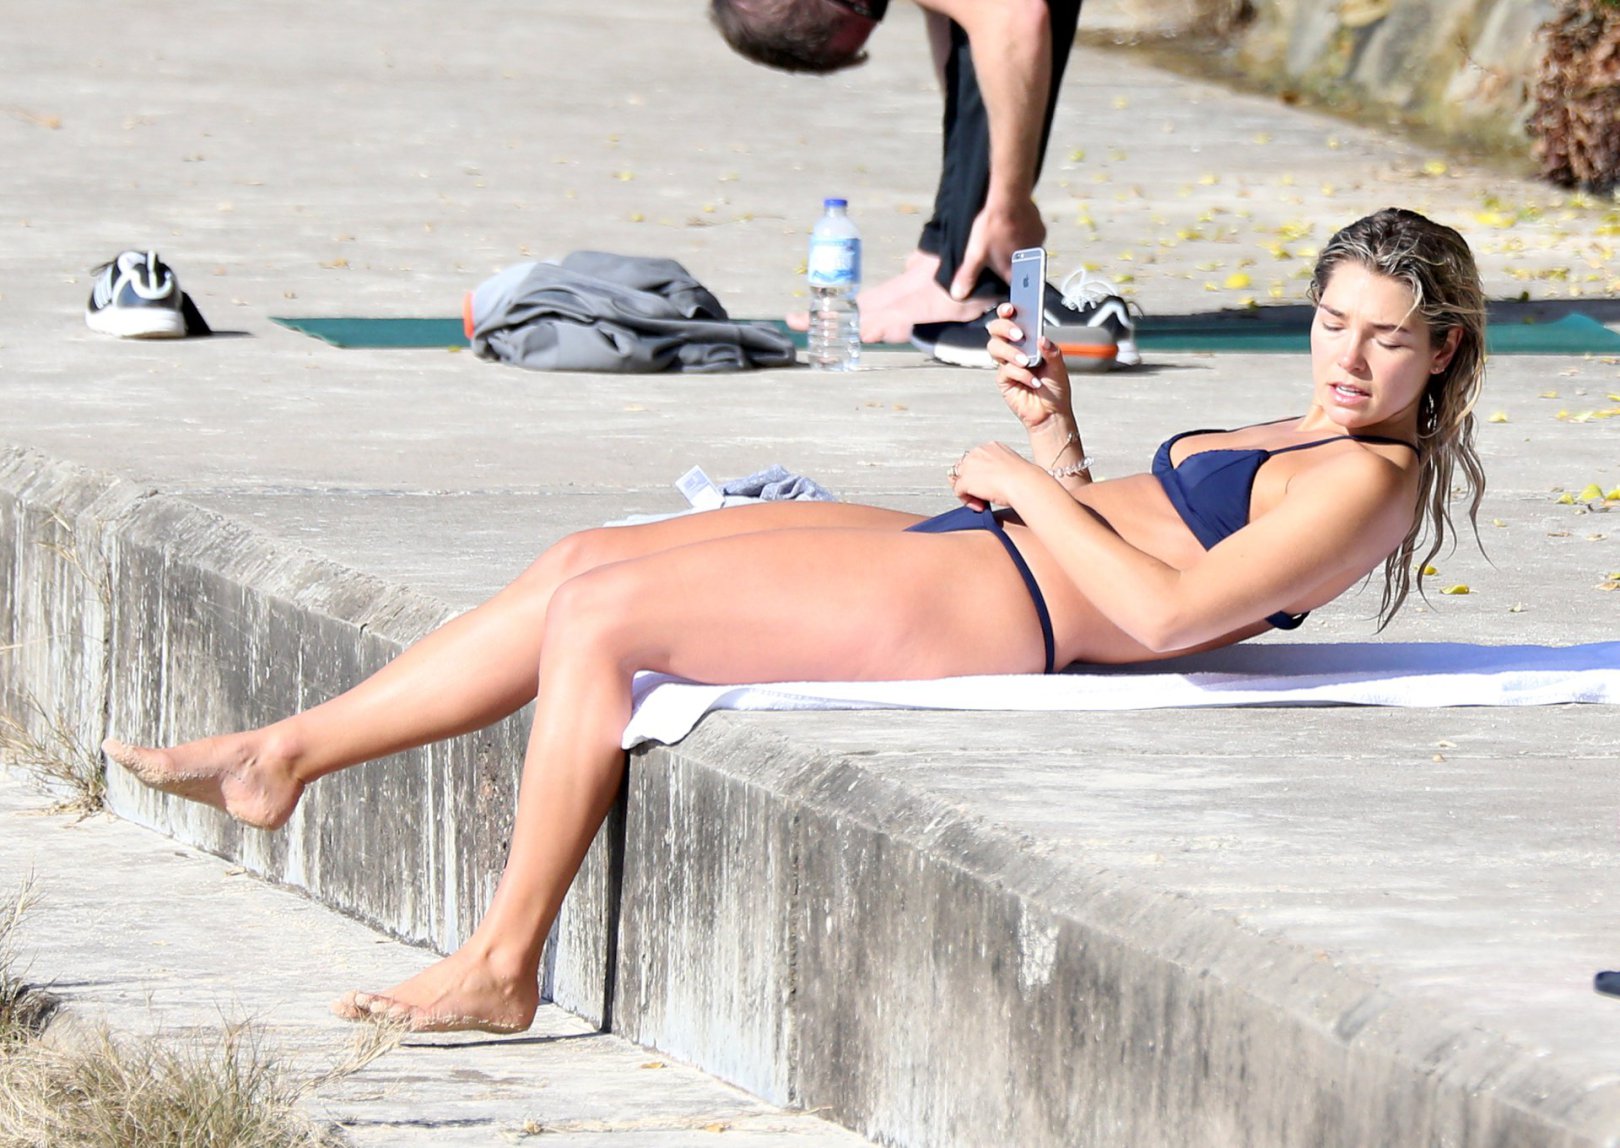 Ashley Hart opala się w granatowym bikini 